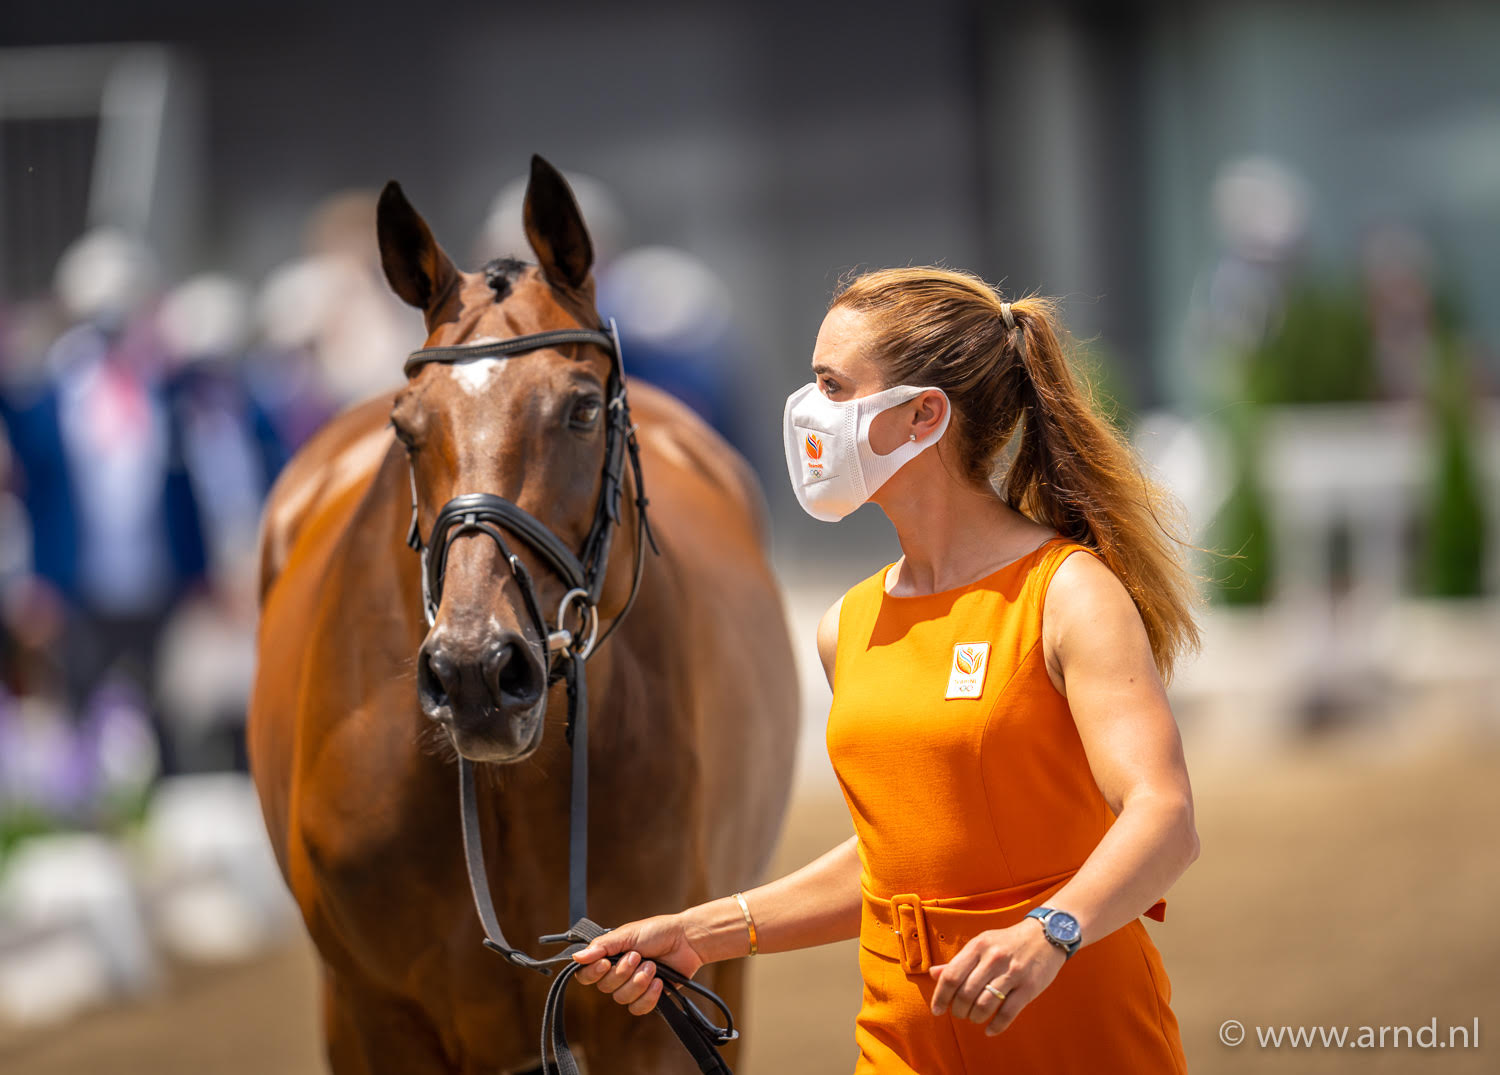 European Championships Horseracing: Dutch horses run smoothly through veterinary examination